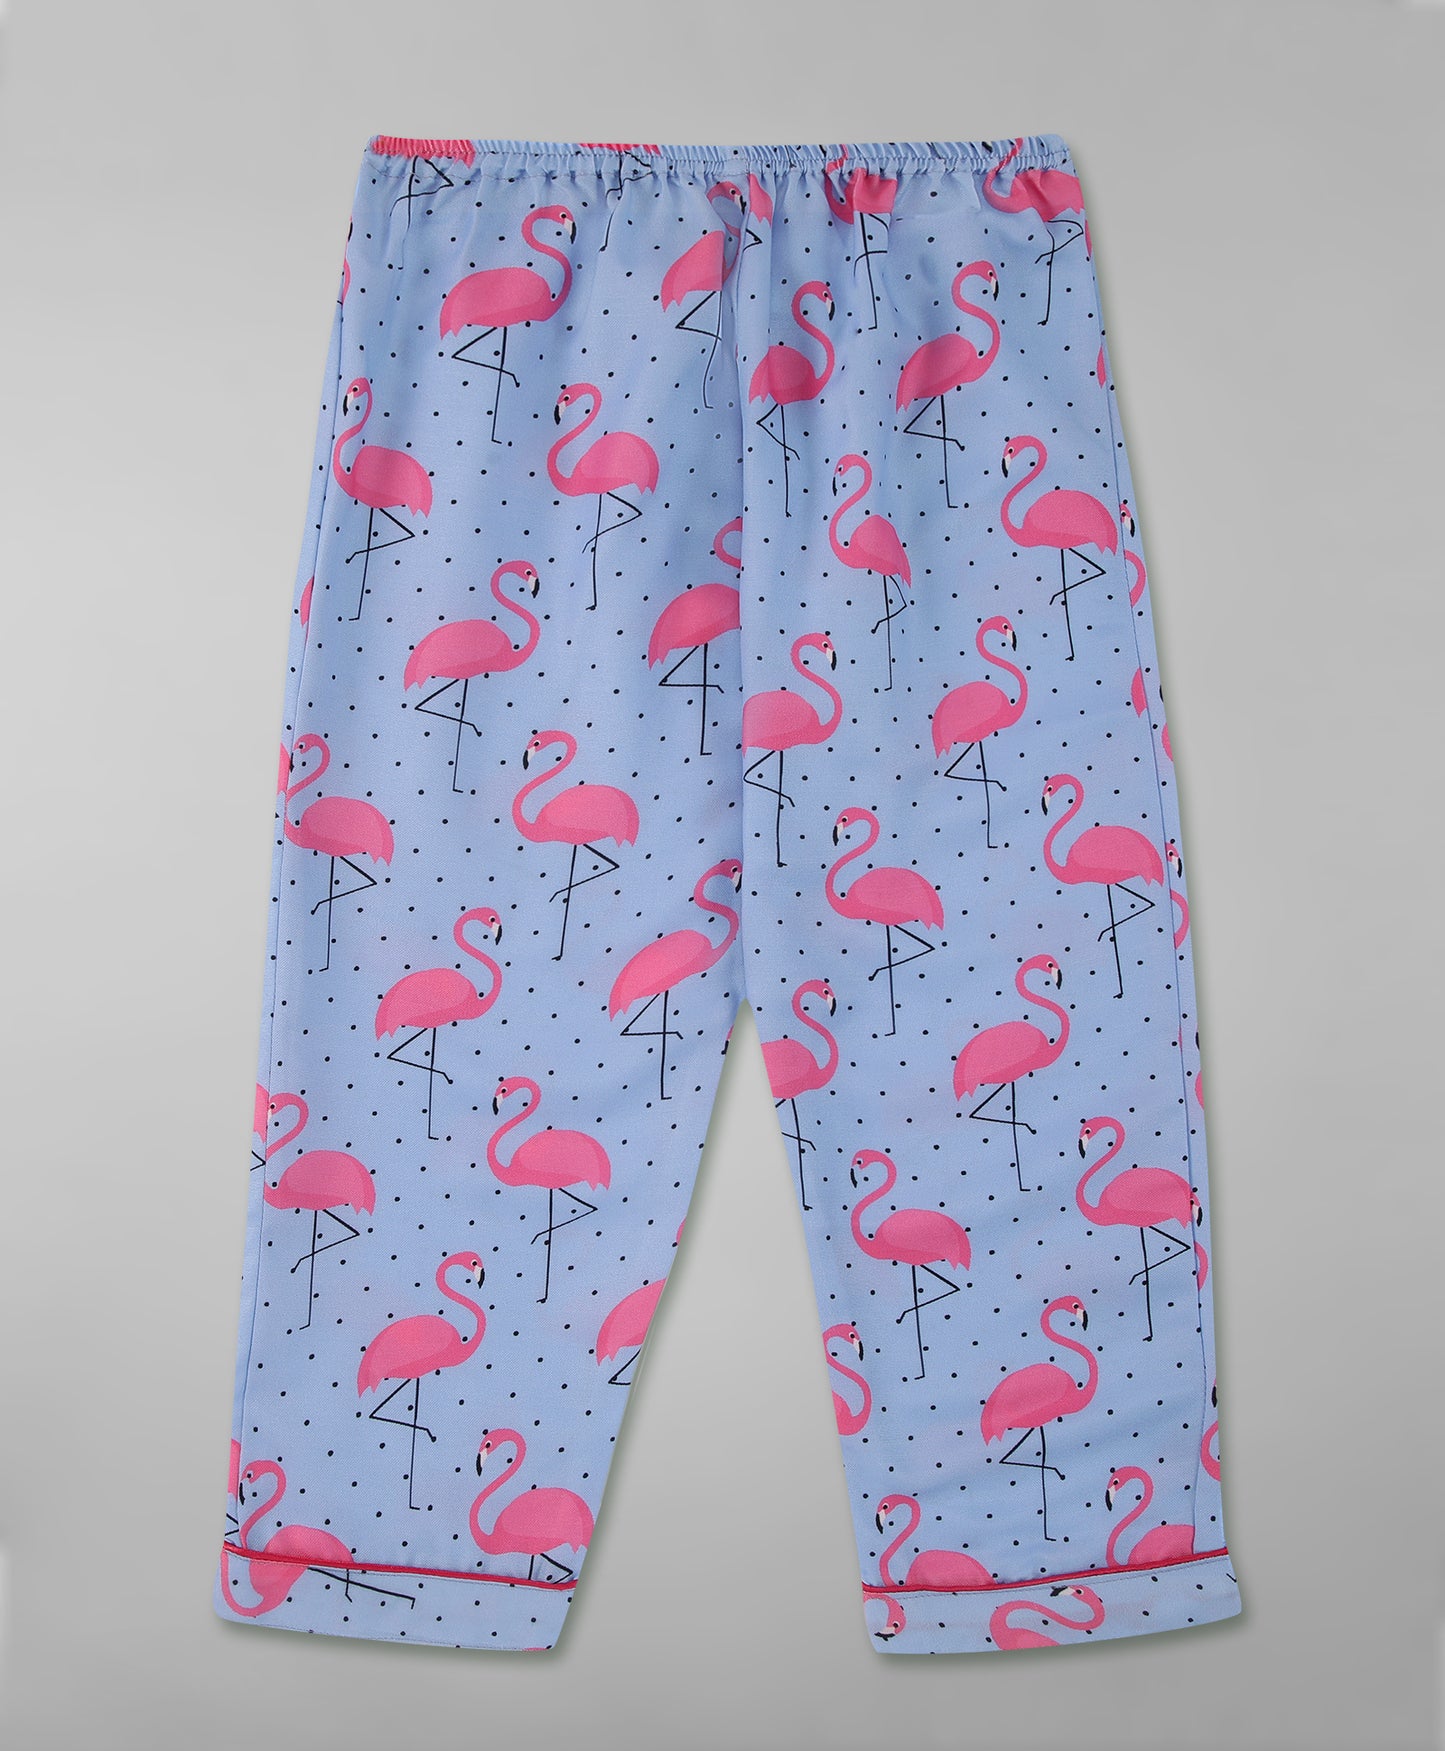 Flamingo and Dots Kids Pj Set - Cotton Rayon Pj Set with Notched Collar